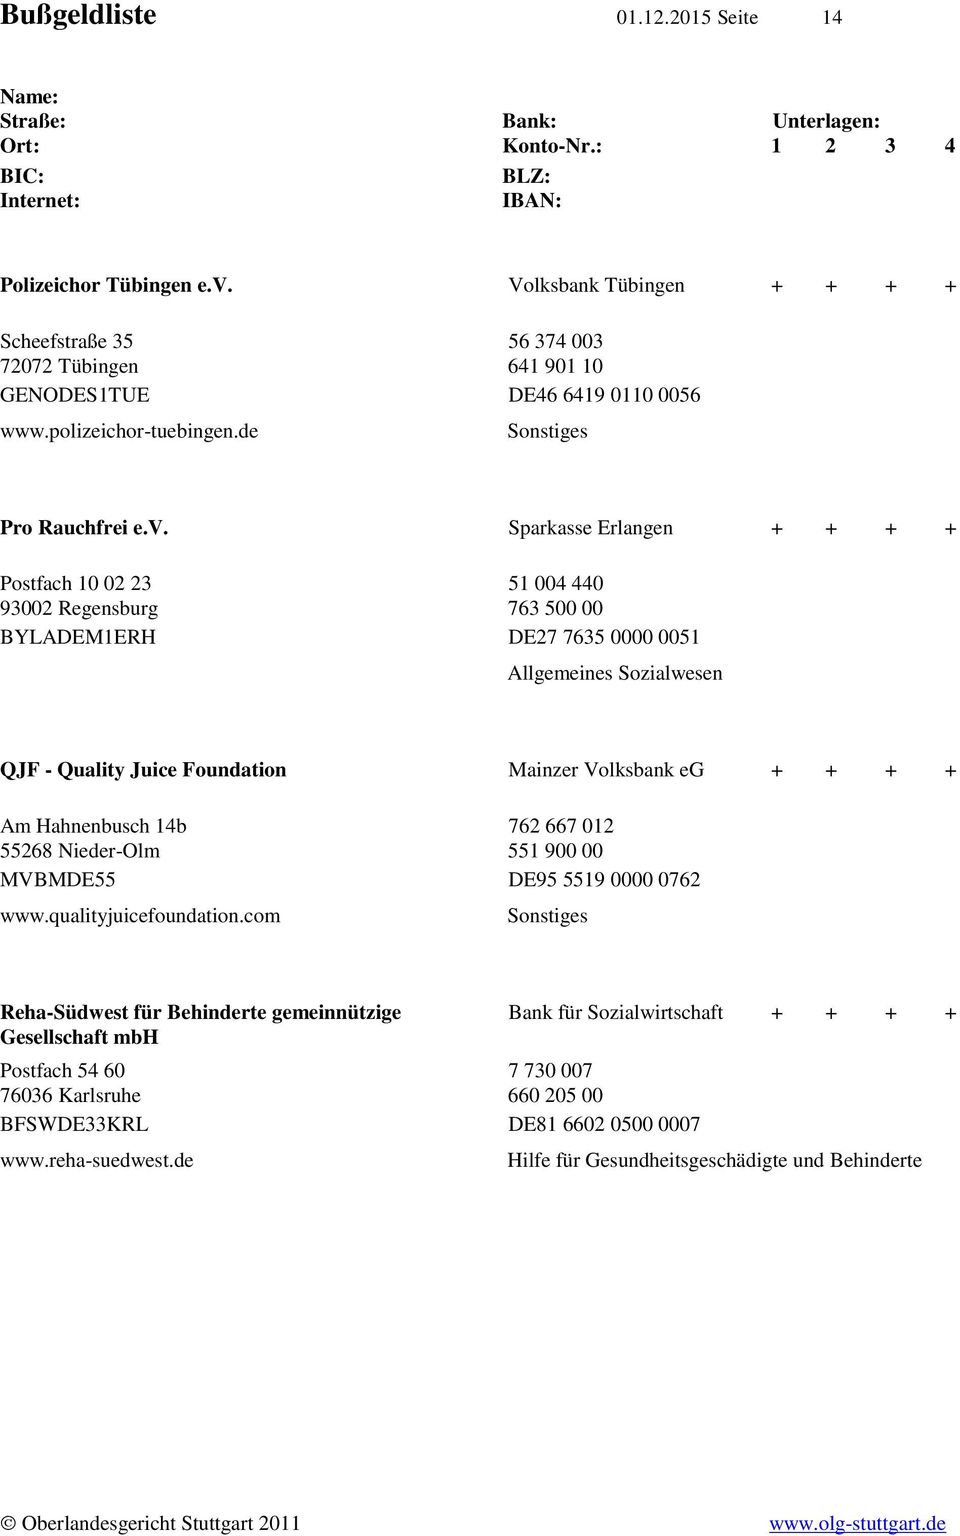 Sparkasse Erlangen + + + + Postfach 10 02 23 93002 Regensburg 51 004 440 763 500 00 BYLADEM1ERH DE27 7635 0000 0051 QJF - Quality Juice Foundation Mainzer Volksbank eg + + + +